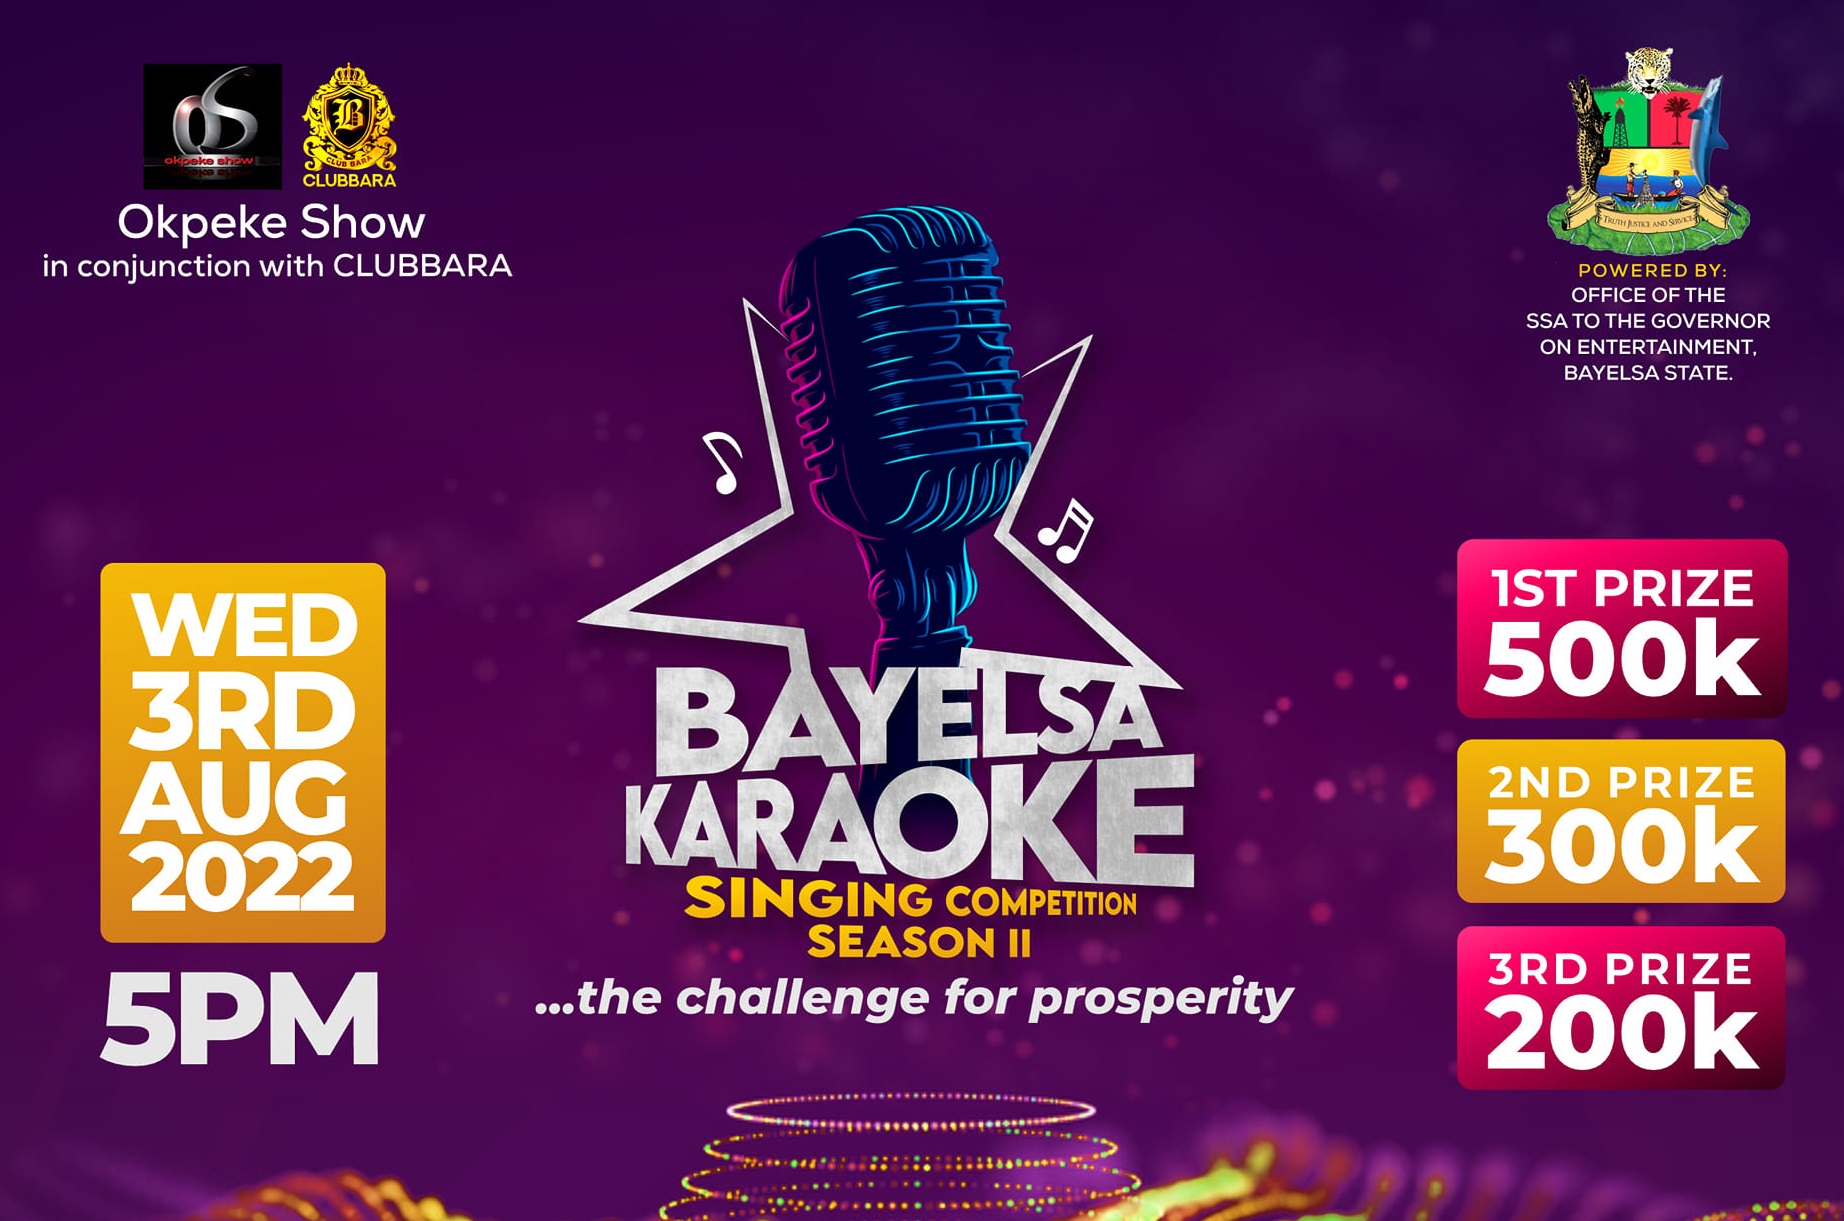 Bayelsa Karaoke Singing Competition Season II Opens August 3 at Club Bara